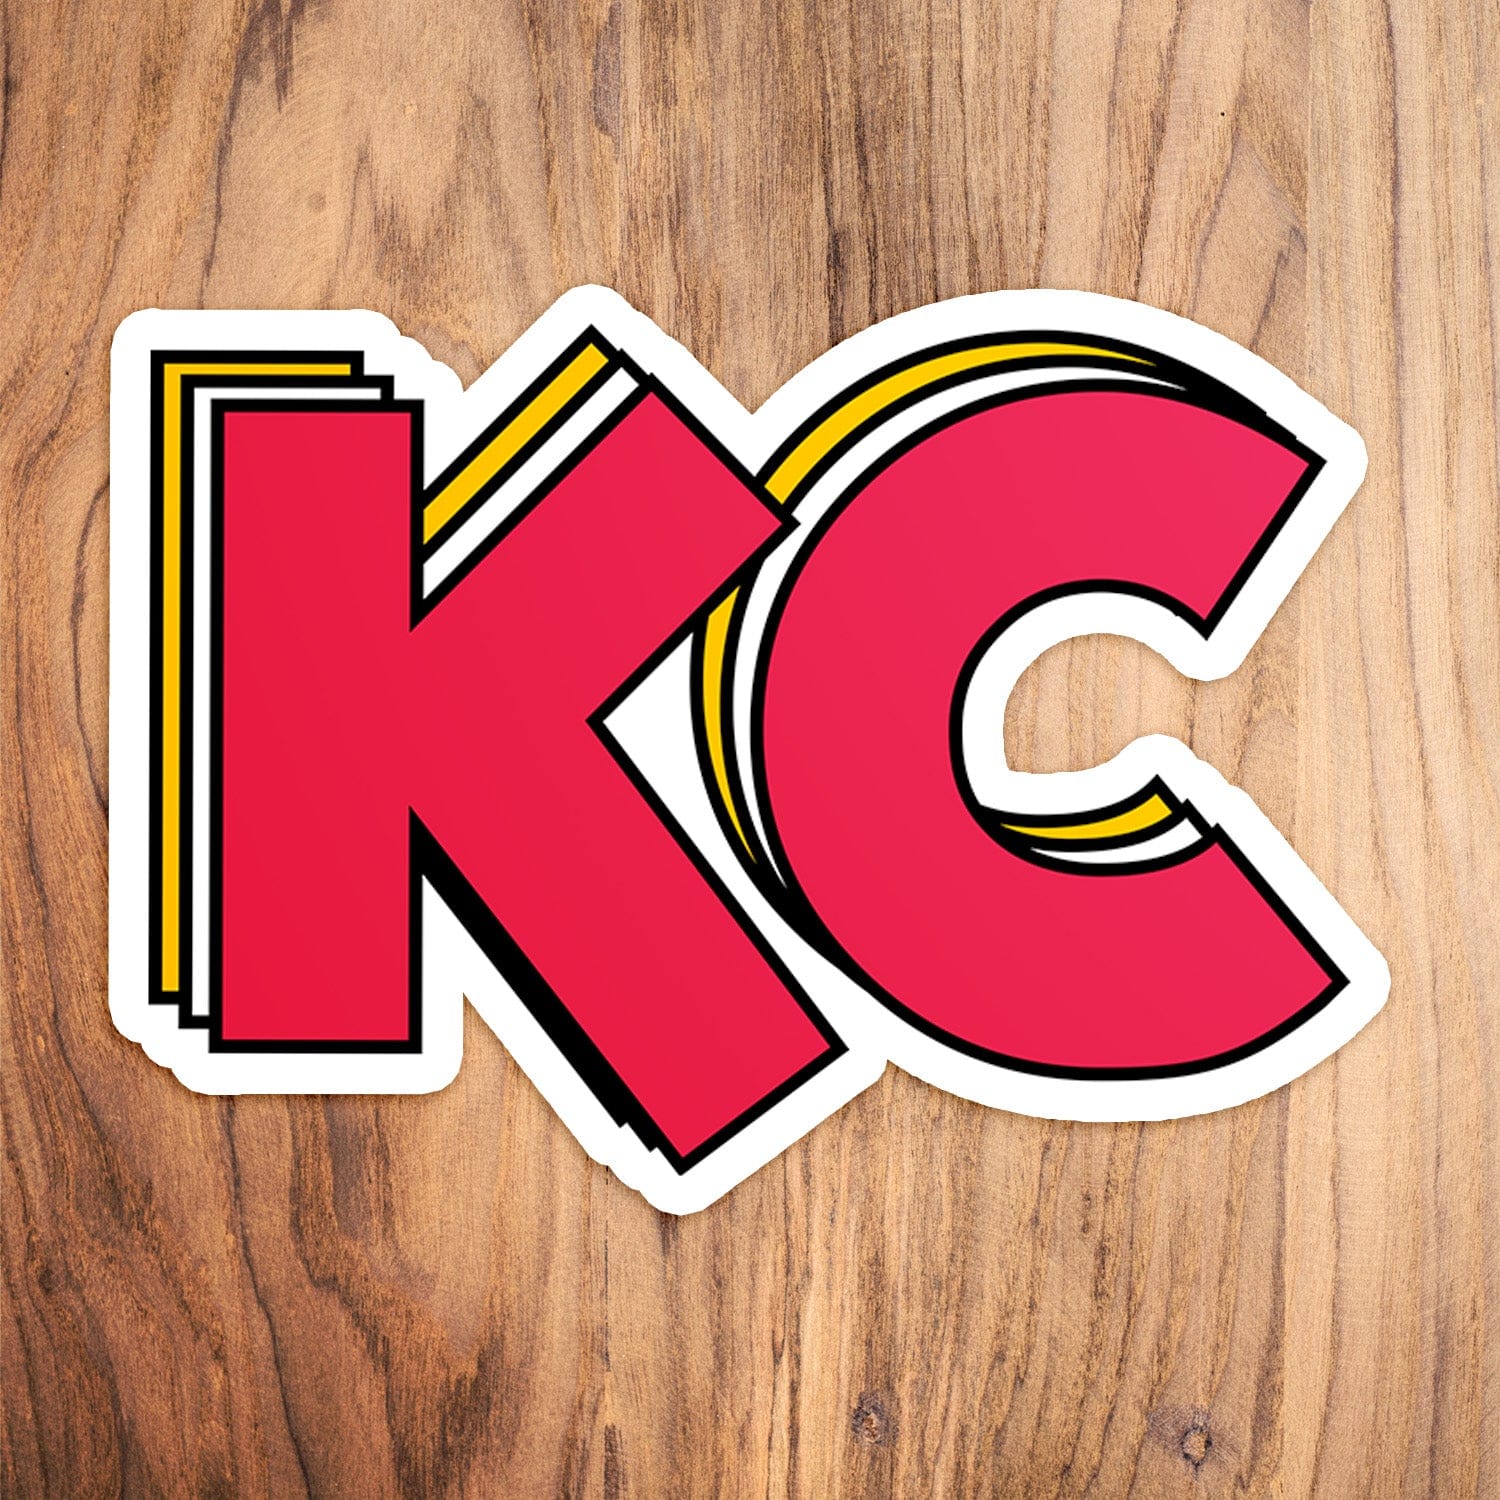  Kc Chiefs Stickers